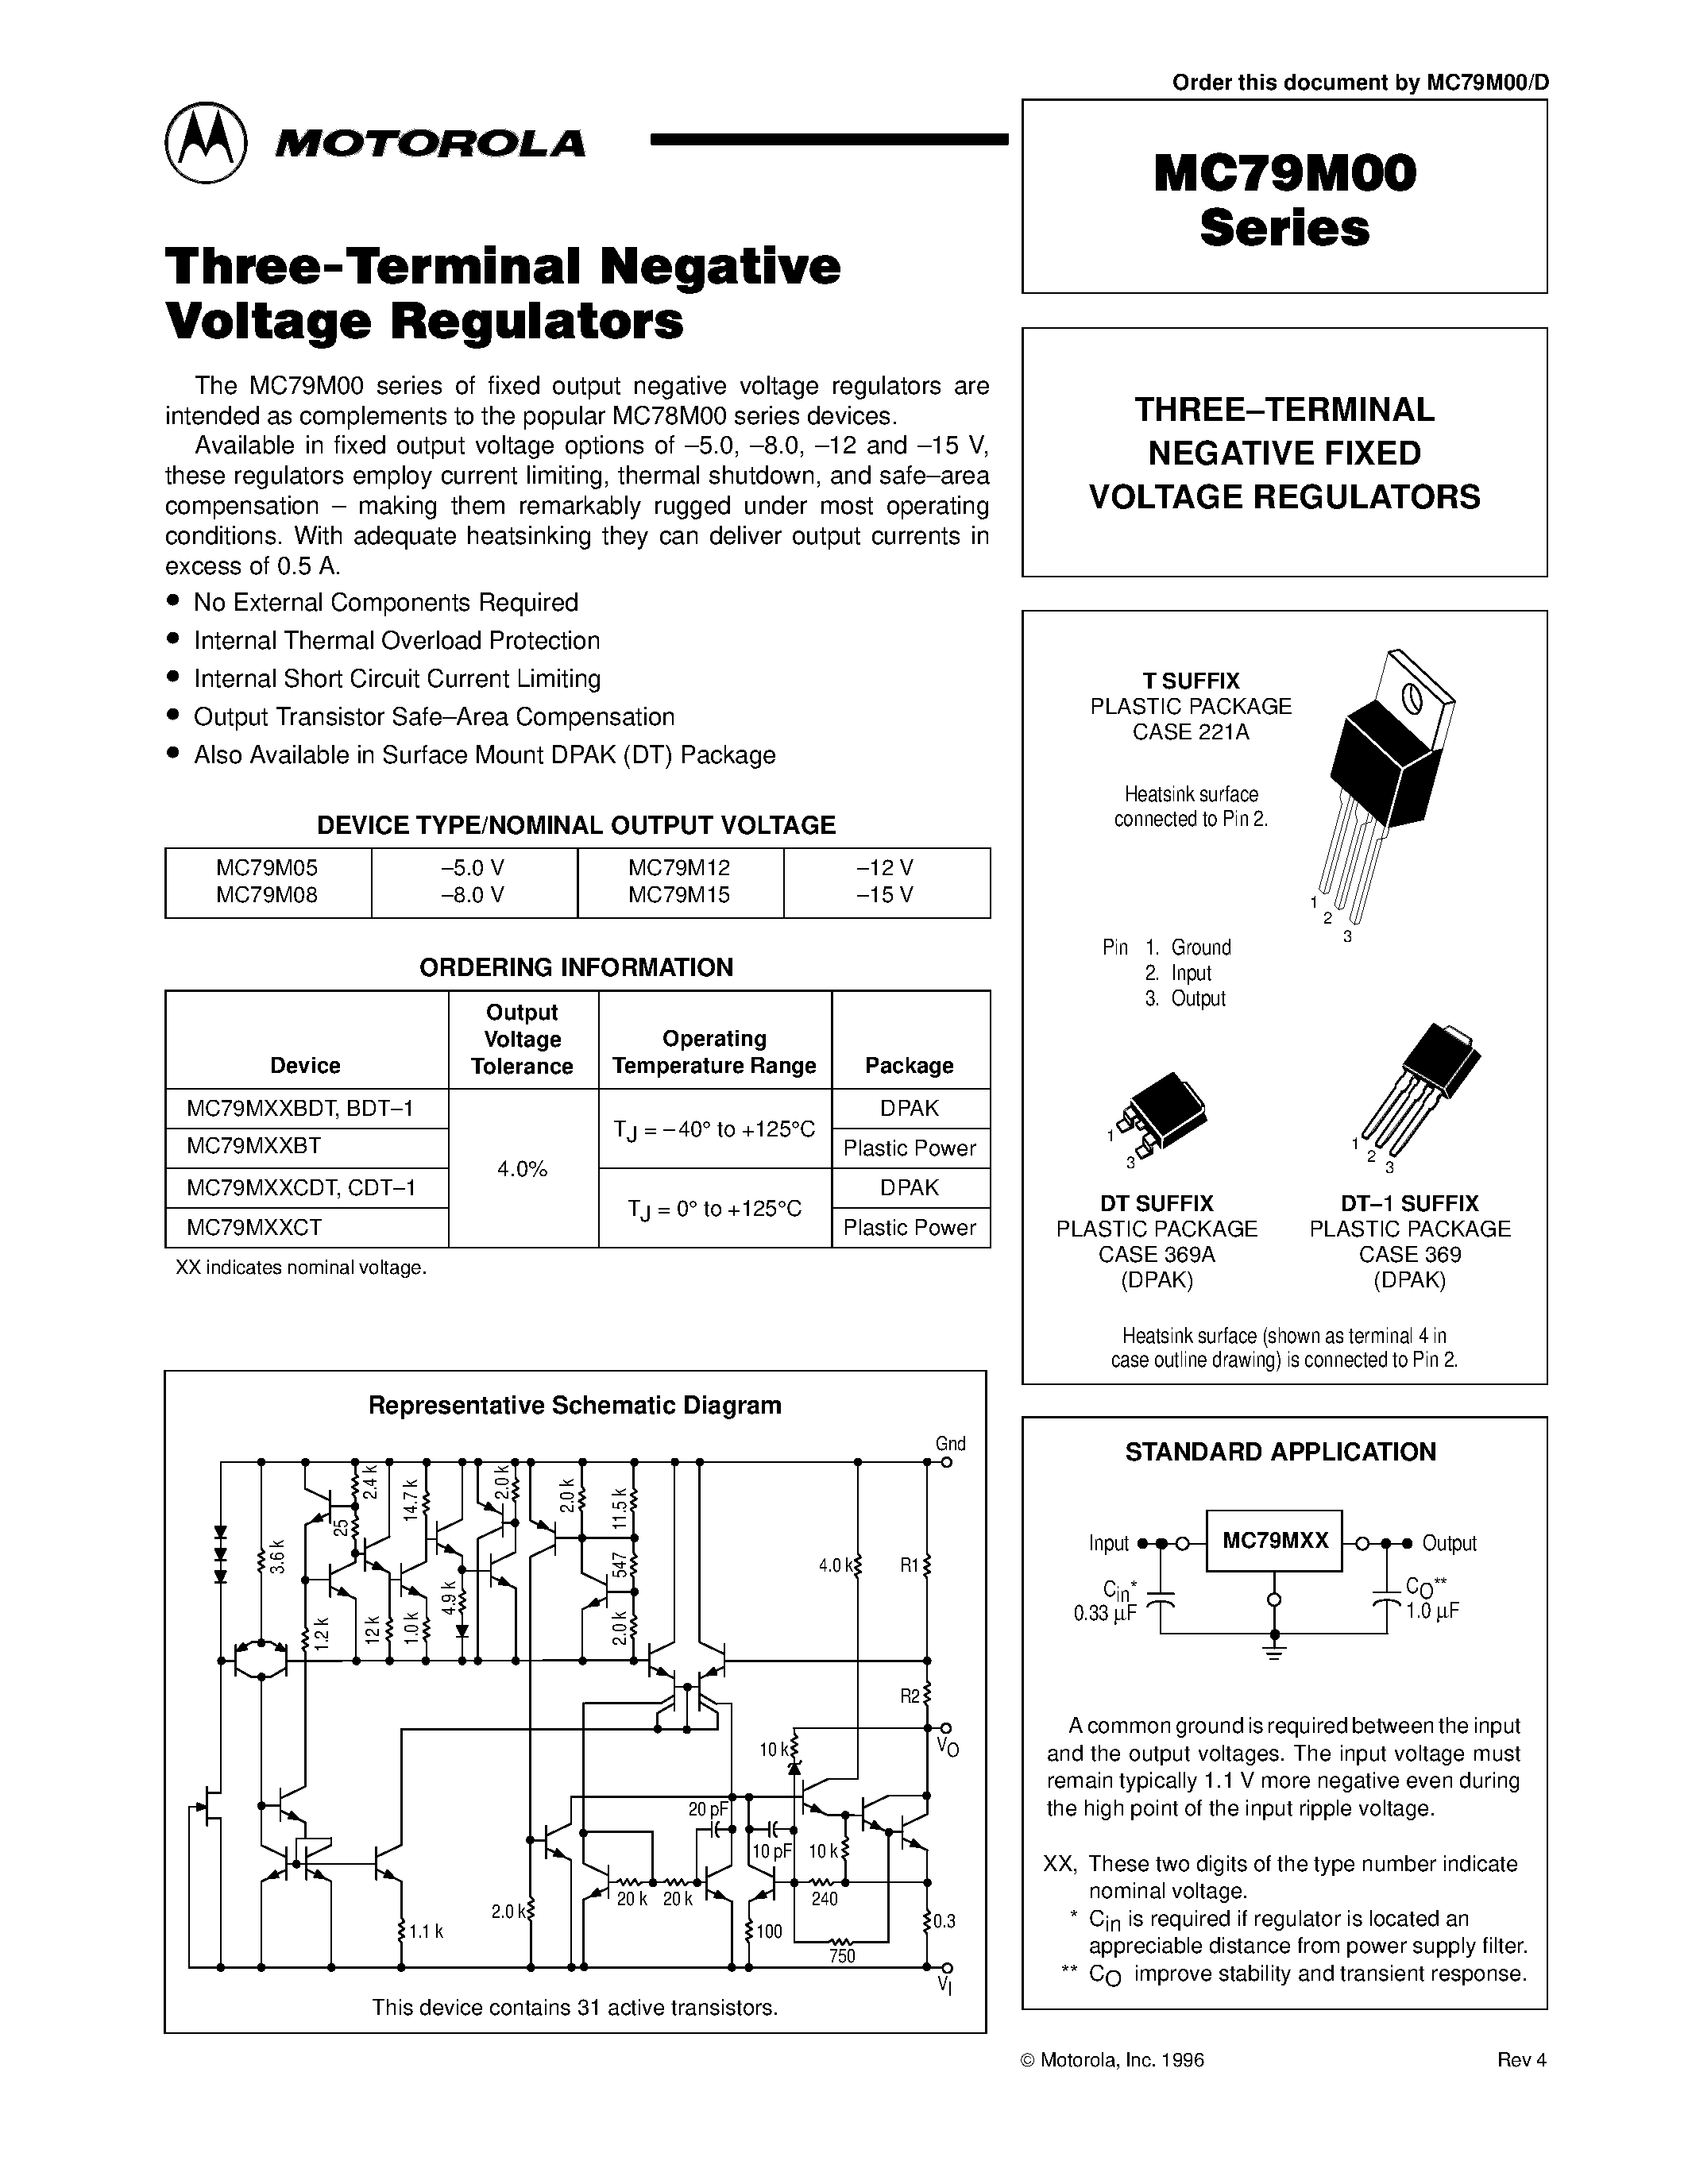 Datasheet MC79M15CDT - THREE-TERMINAL NEGATIVE FIXED VOLTAGE REGULATORS page 1